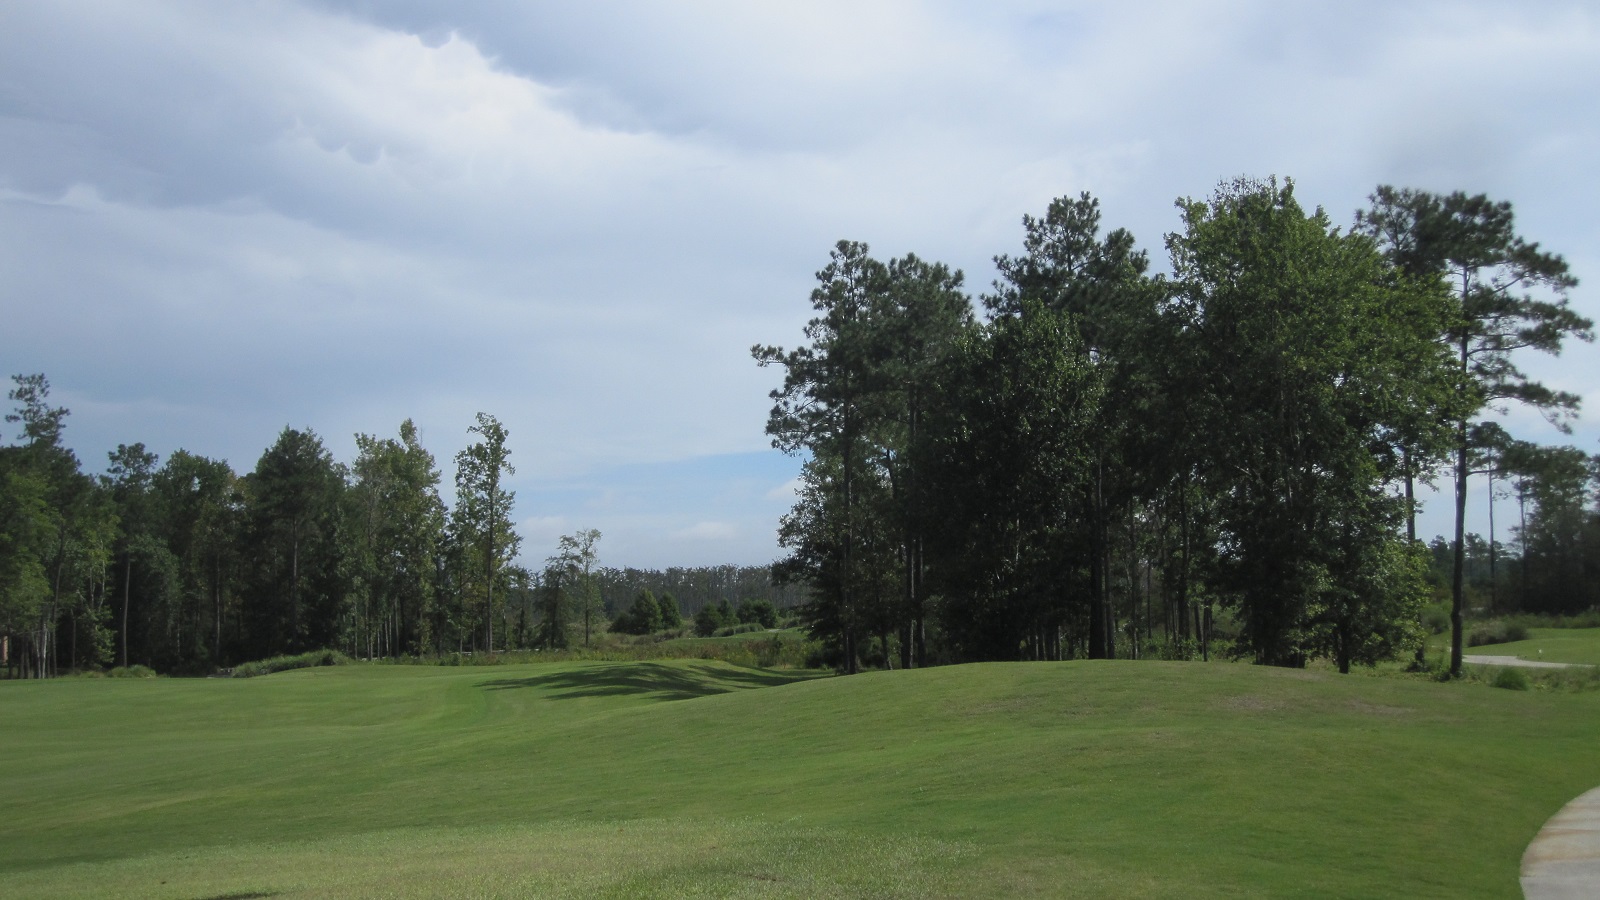 Leland NC photo golf course 